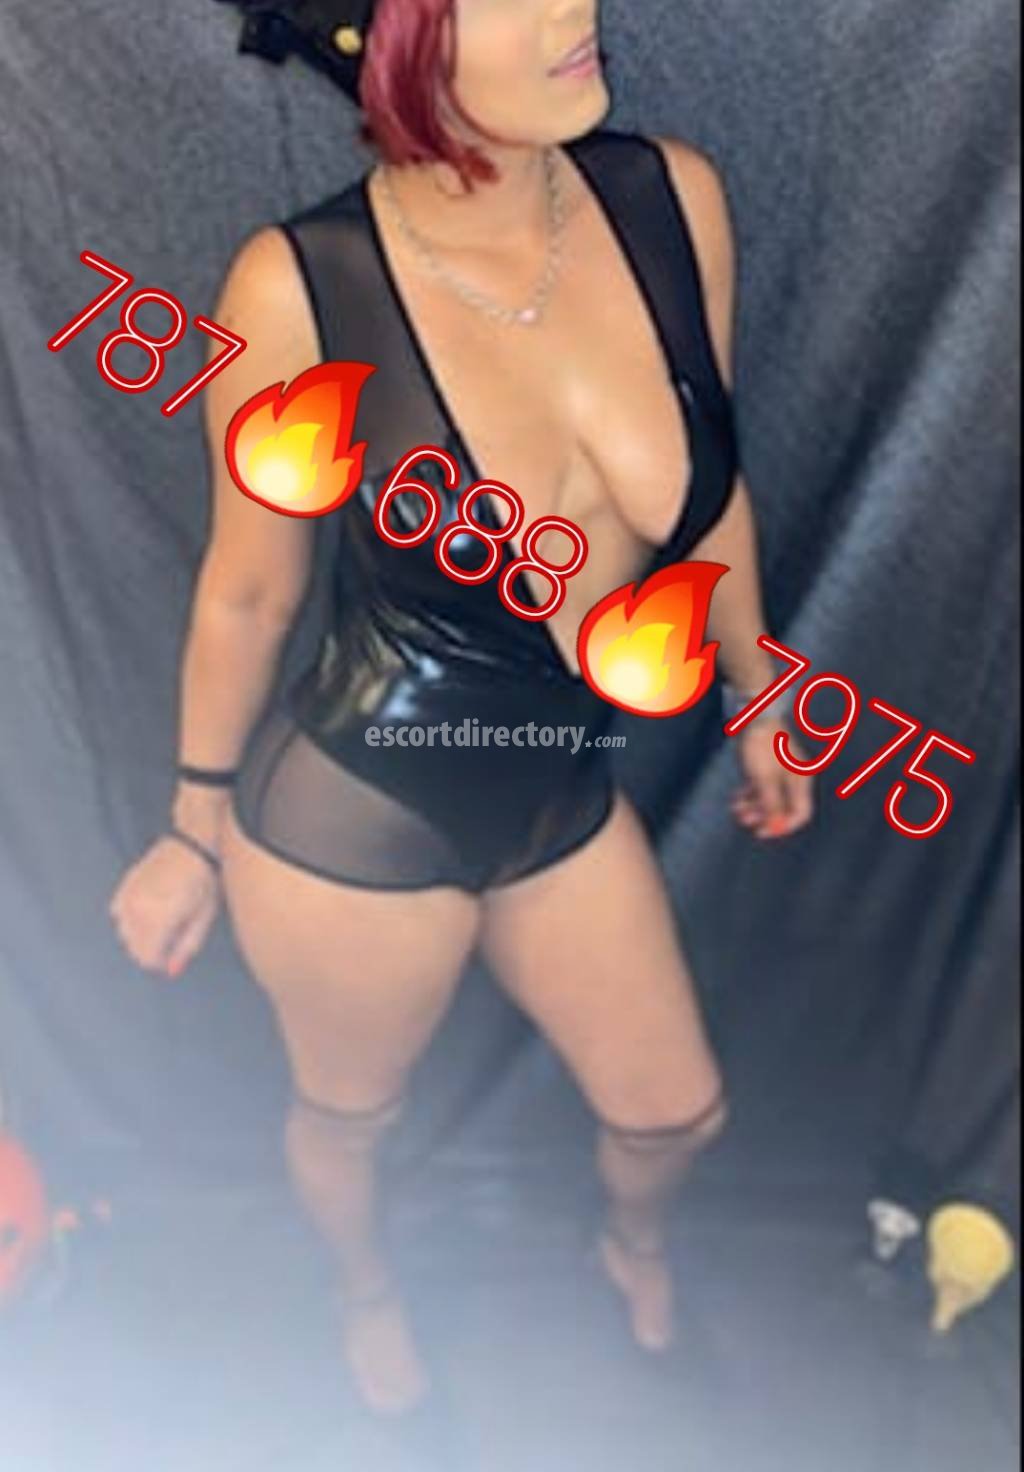 Escort KITKAT69, hot girl in San Juan picture